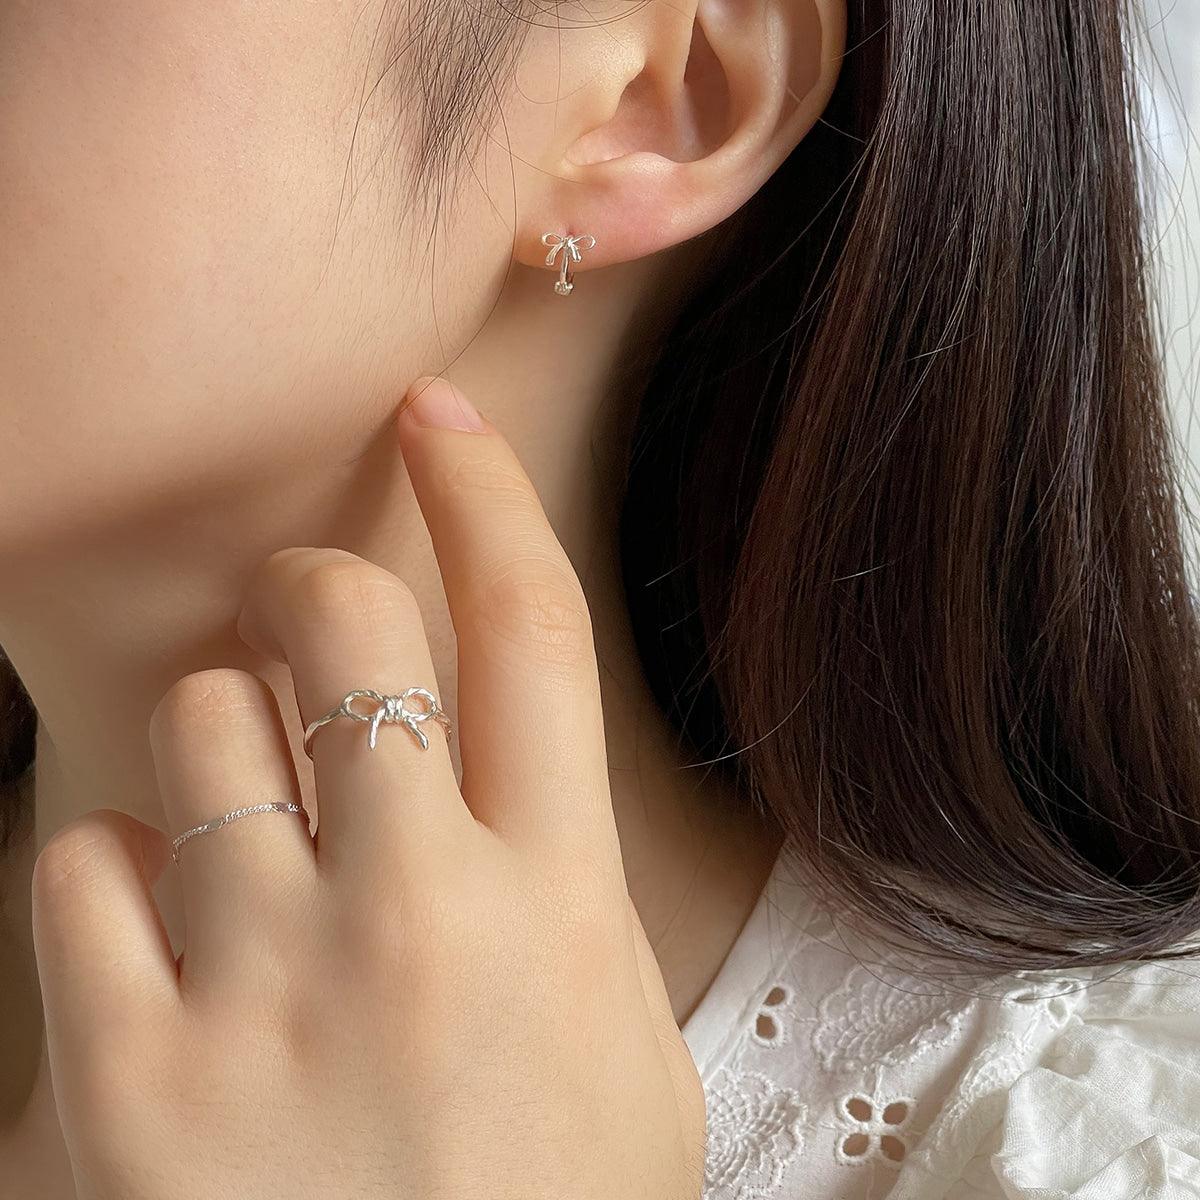 [925 Silver]リボンワンタッチリングピアス Earrings 10000won 